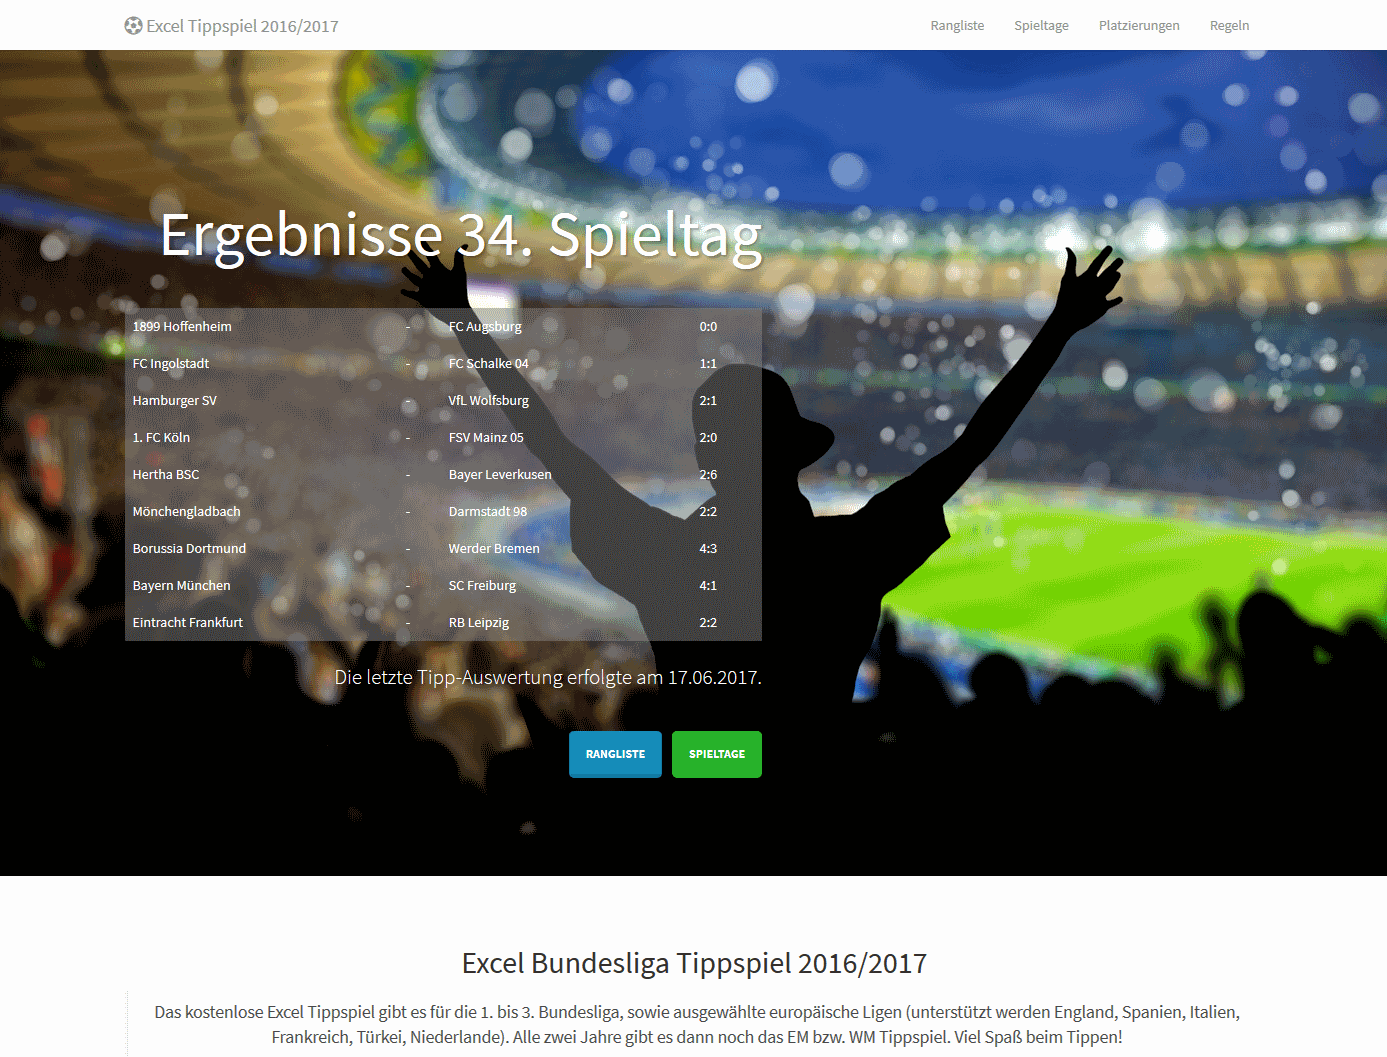 HTML Rangliste Excel Bundesliga Tippspiel